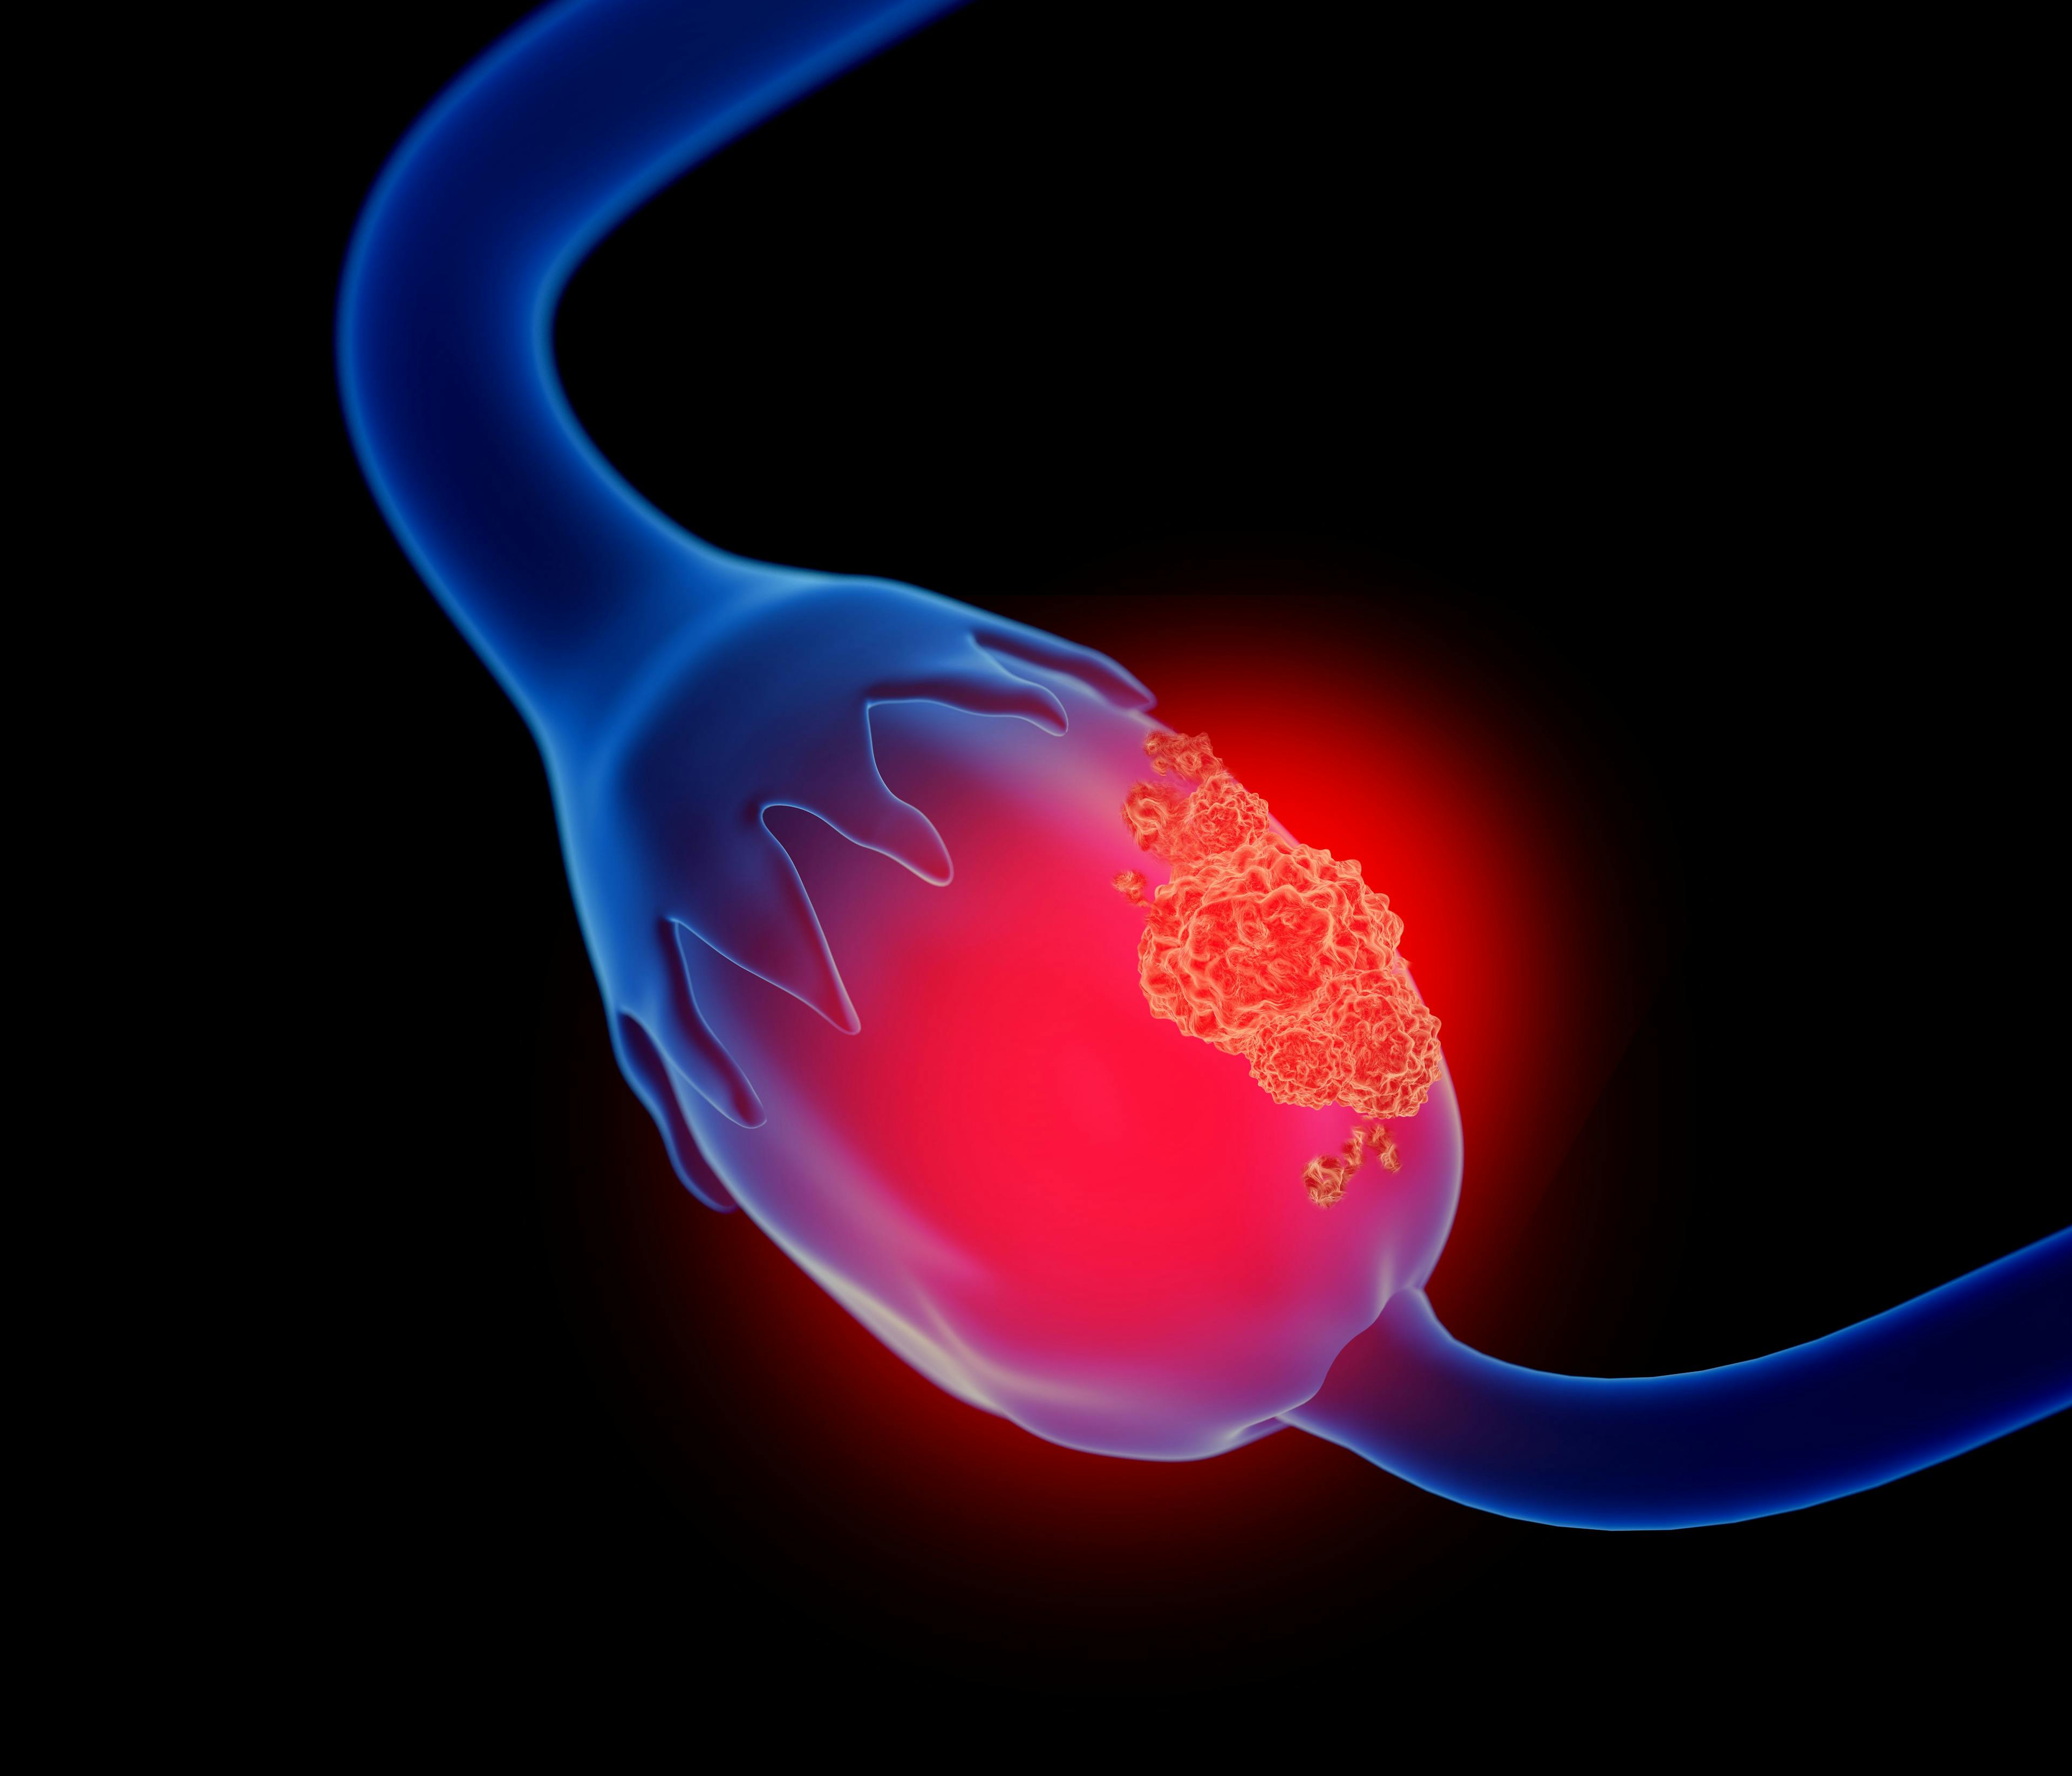 Ovarian cancer | Image credit: Lars Neumann - stock.adobe.com